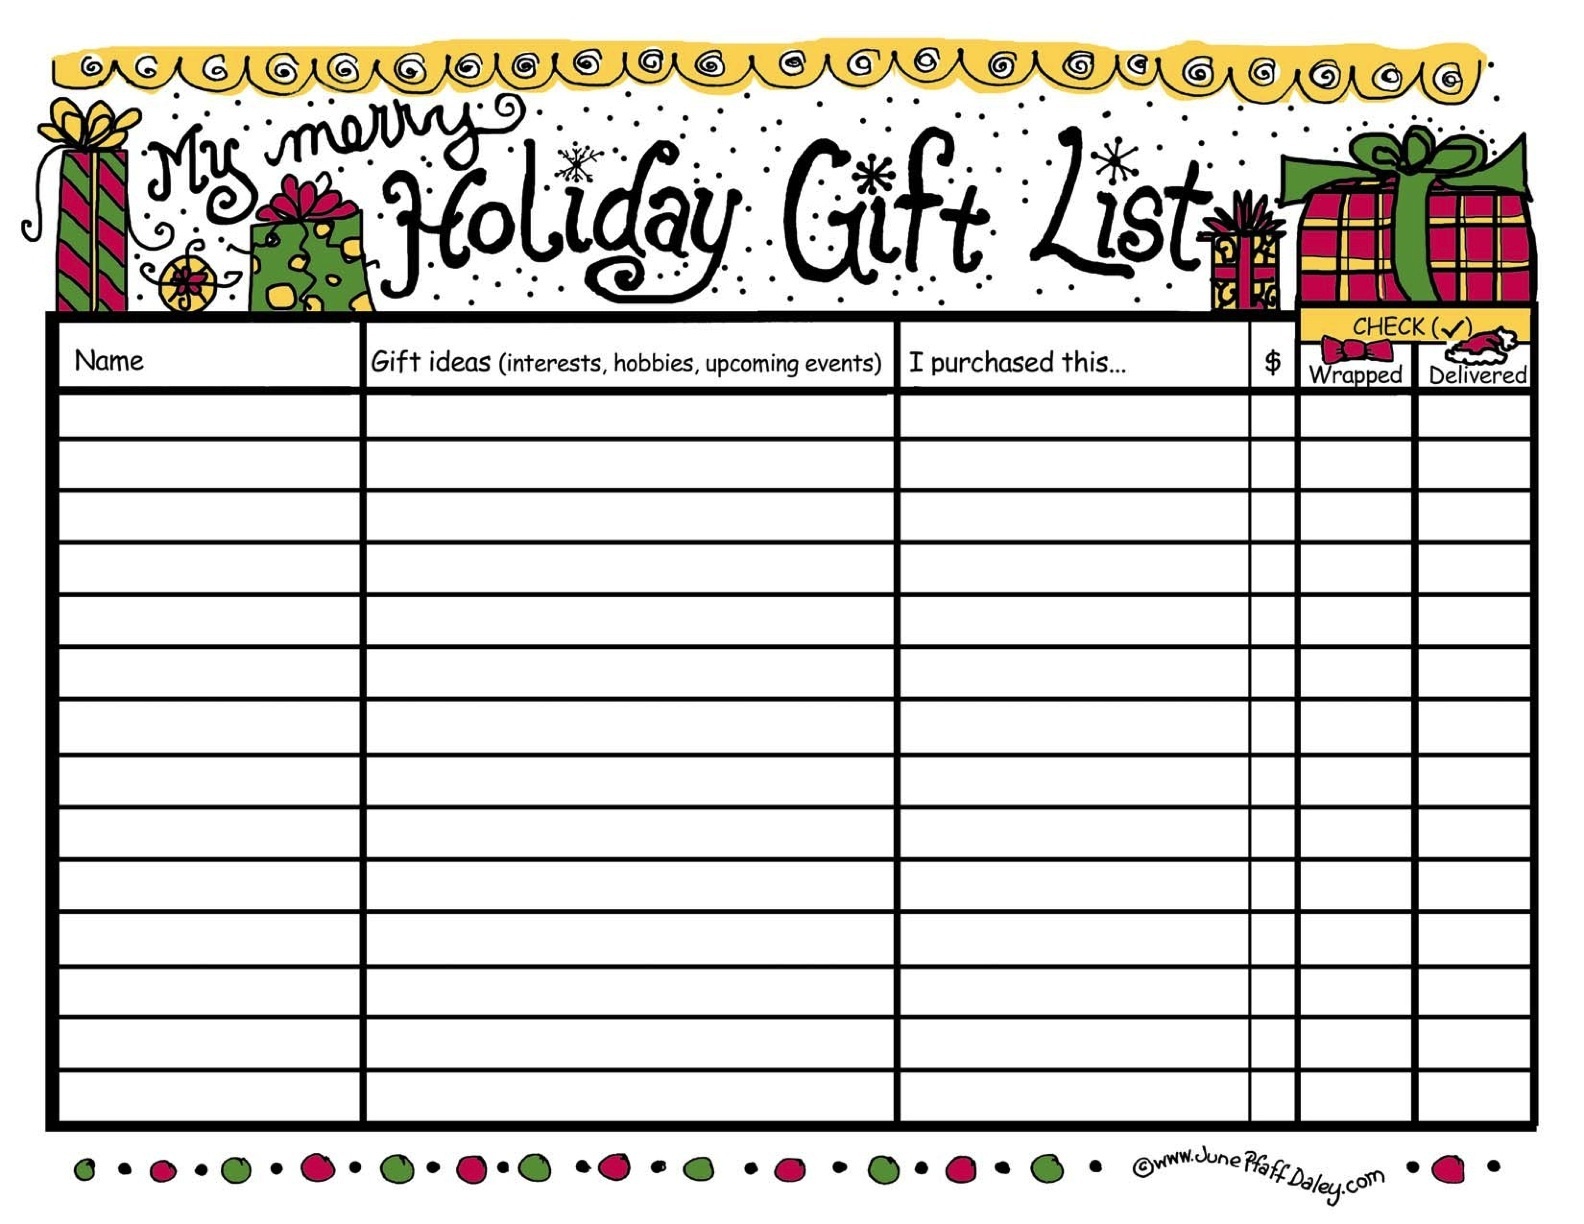 Christmas List Maker Printable - Home Design Ideas - Home Design Ideas - Free Printable Christmas List Maker